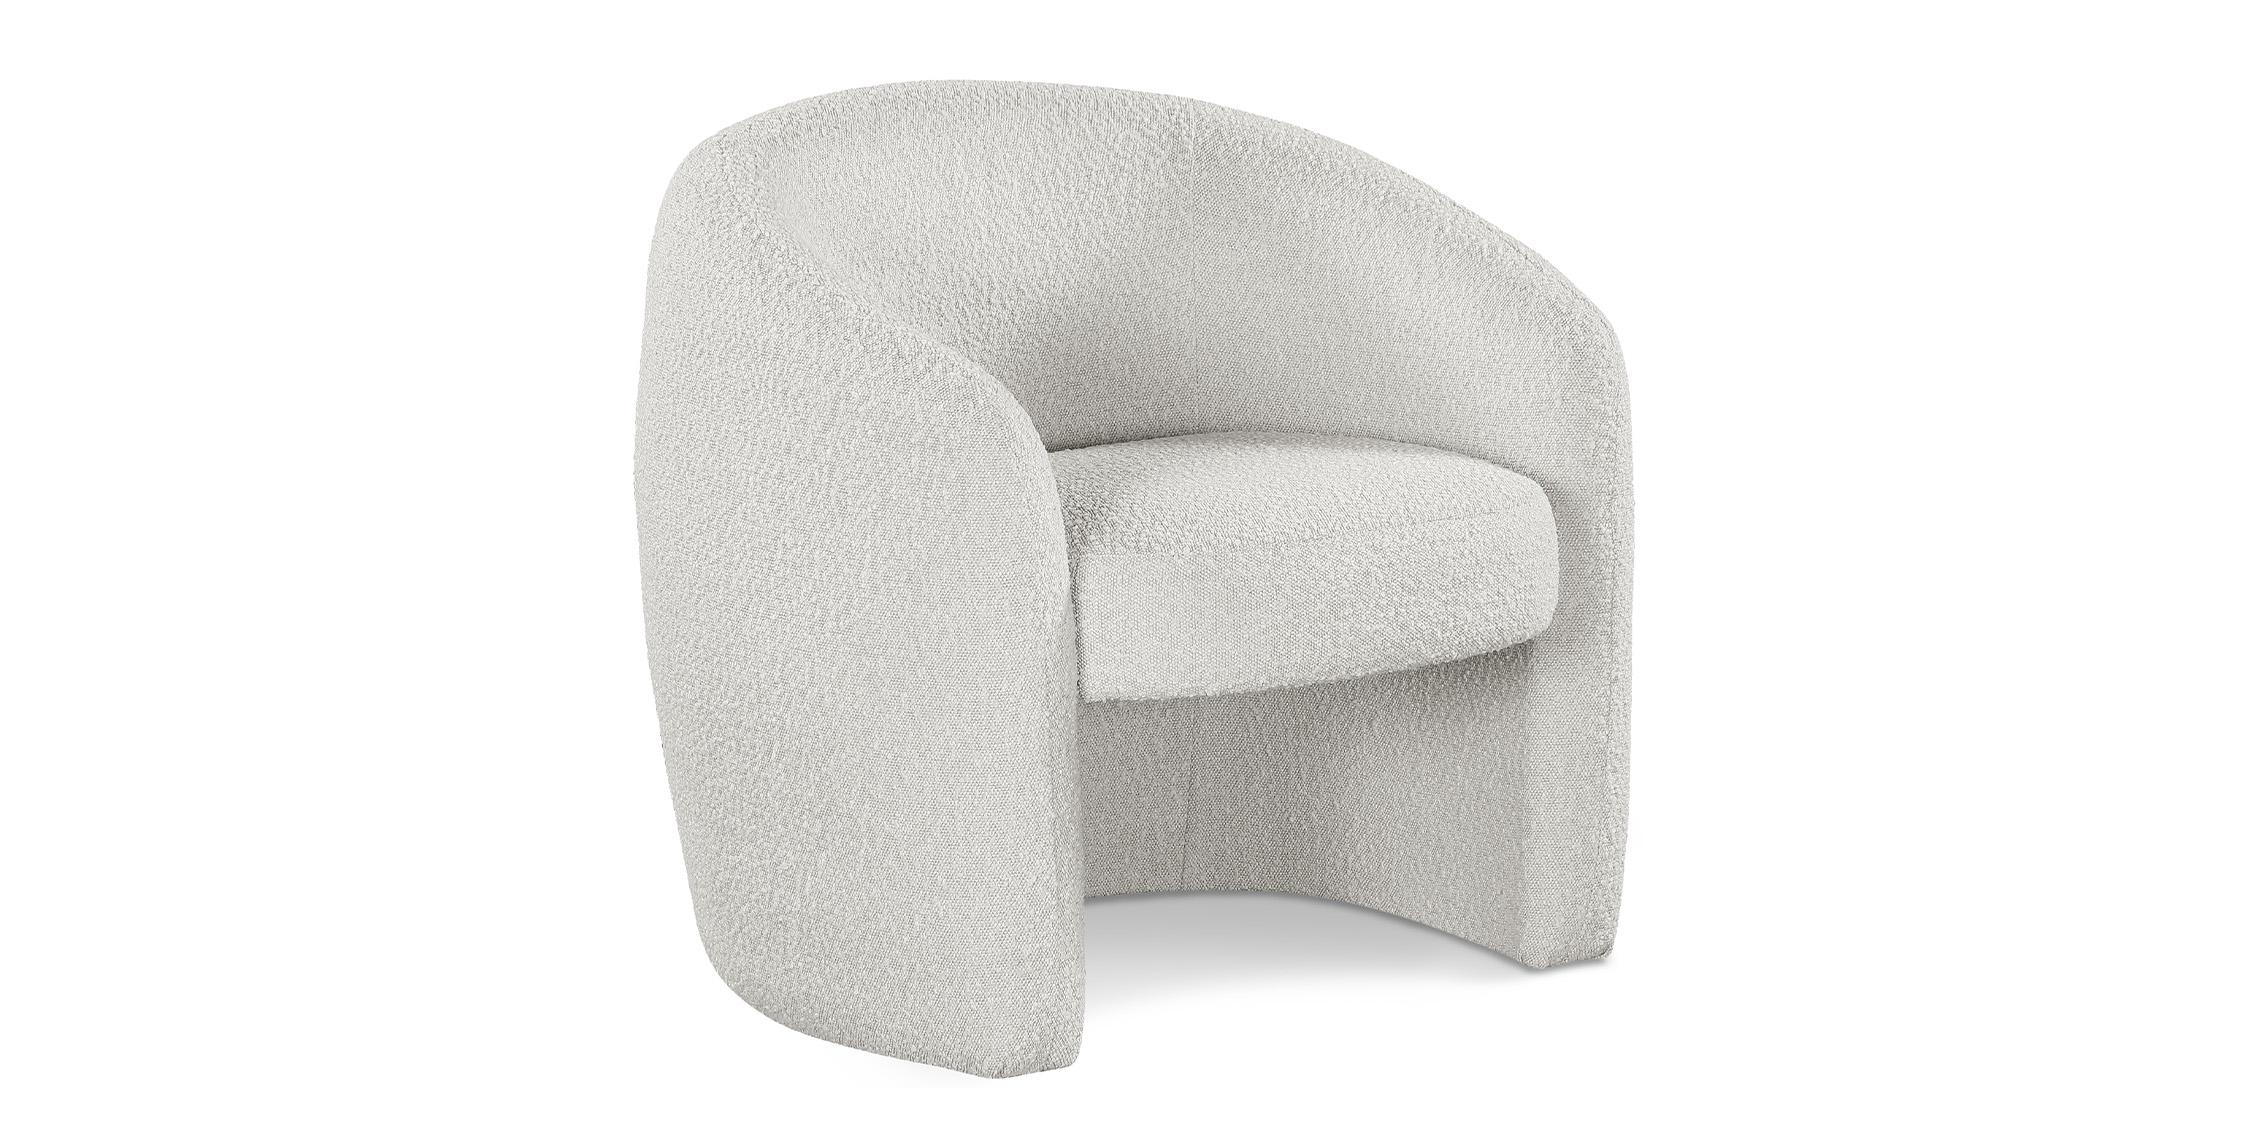 Contemporary, Modern Accent Chair ACADIA 543Cream 543Cream in Cream 